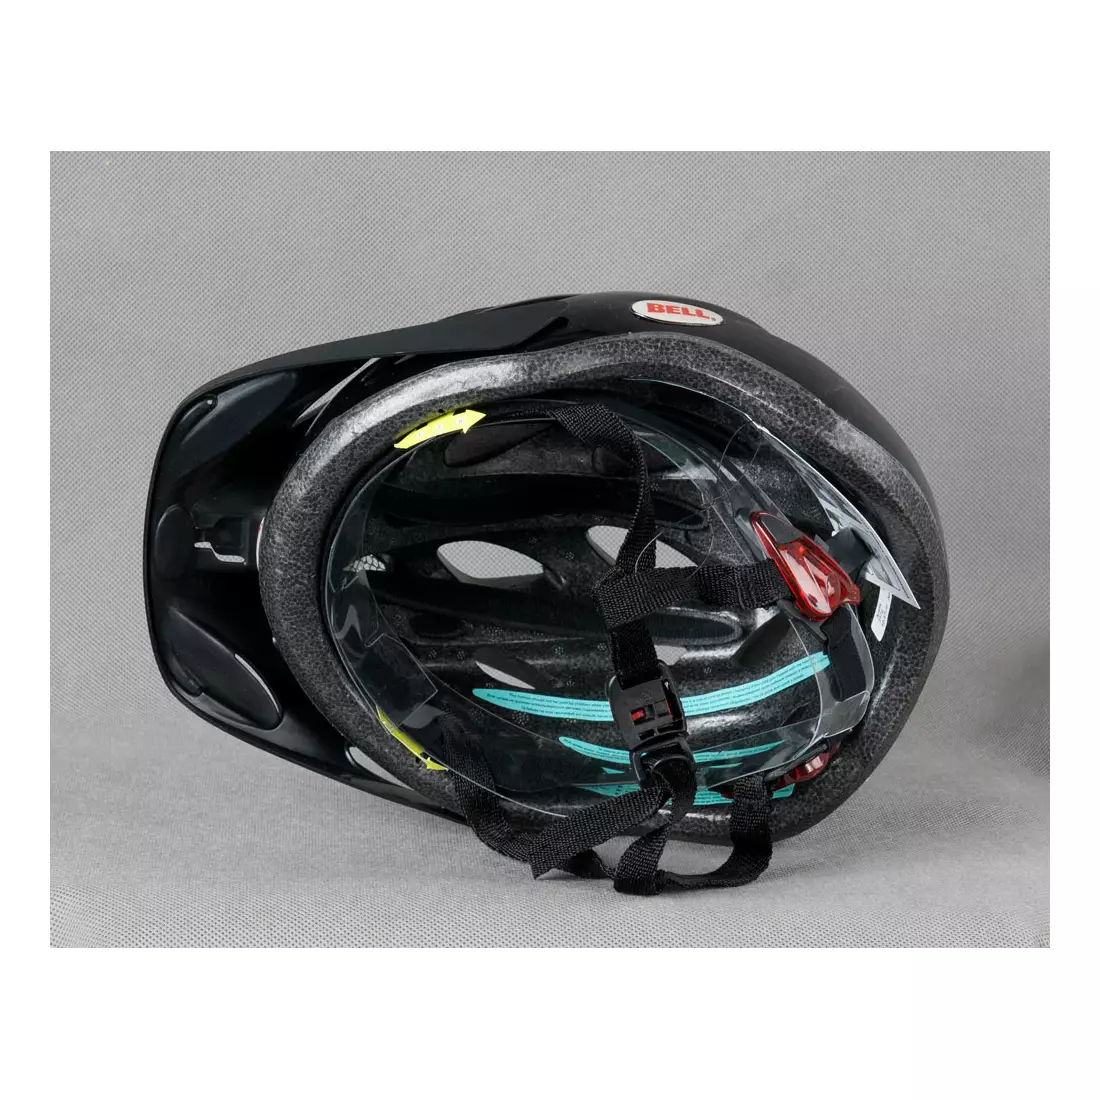 BELL - ARELLA Damen-Fahrradhelm, Farbe: Schwarz